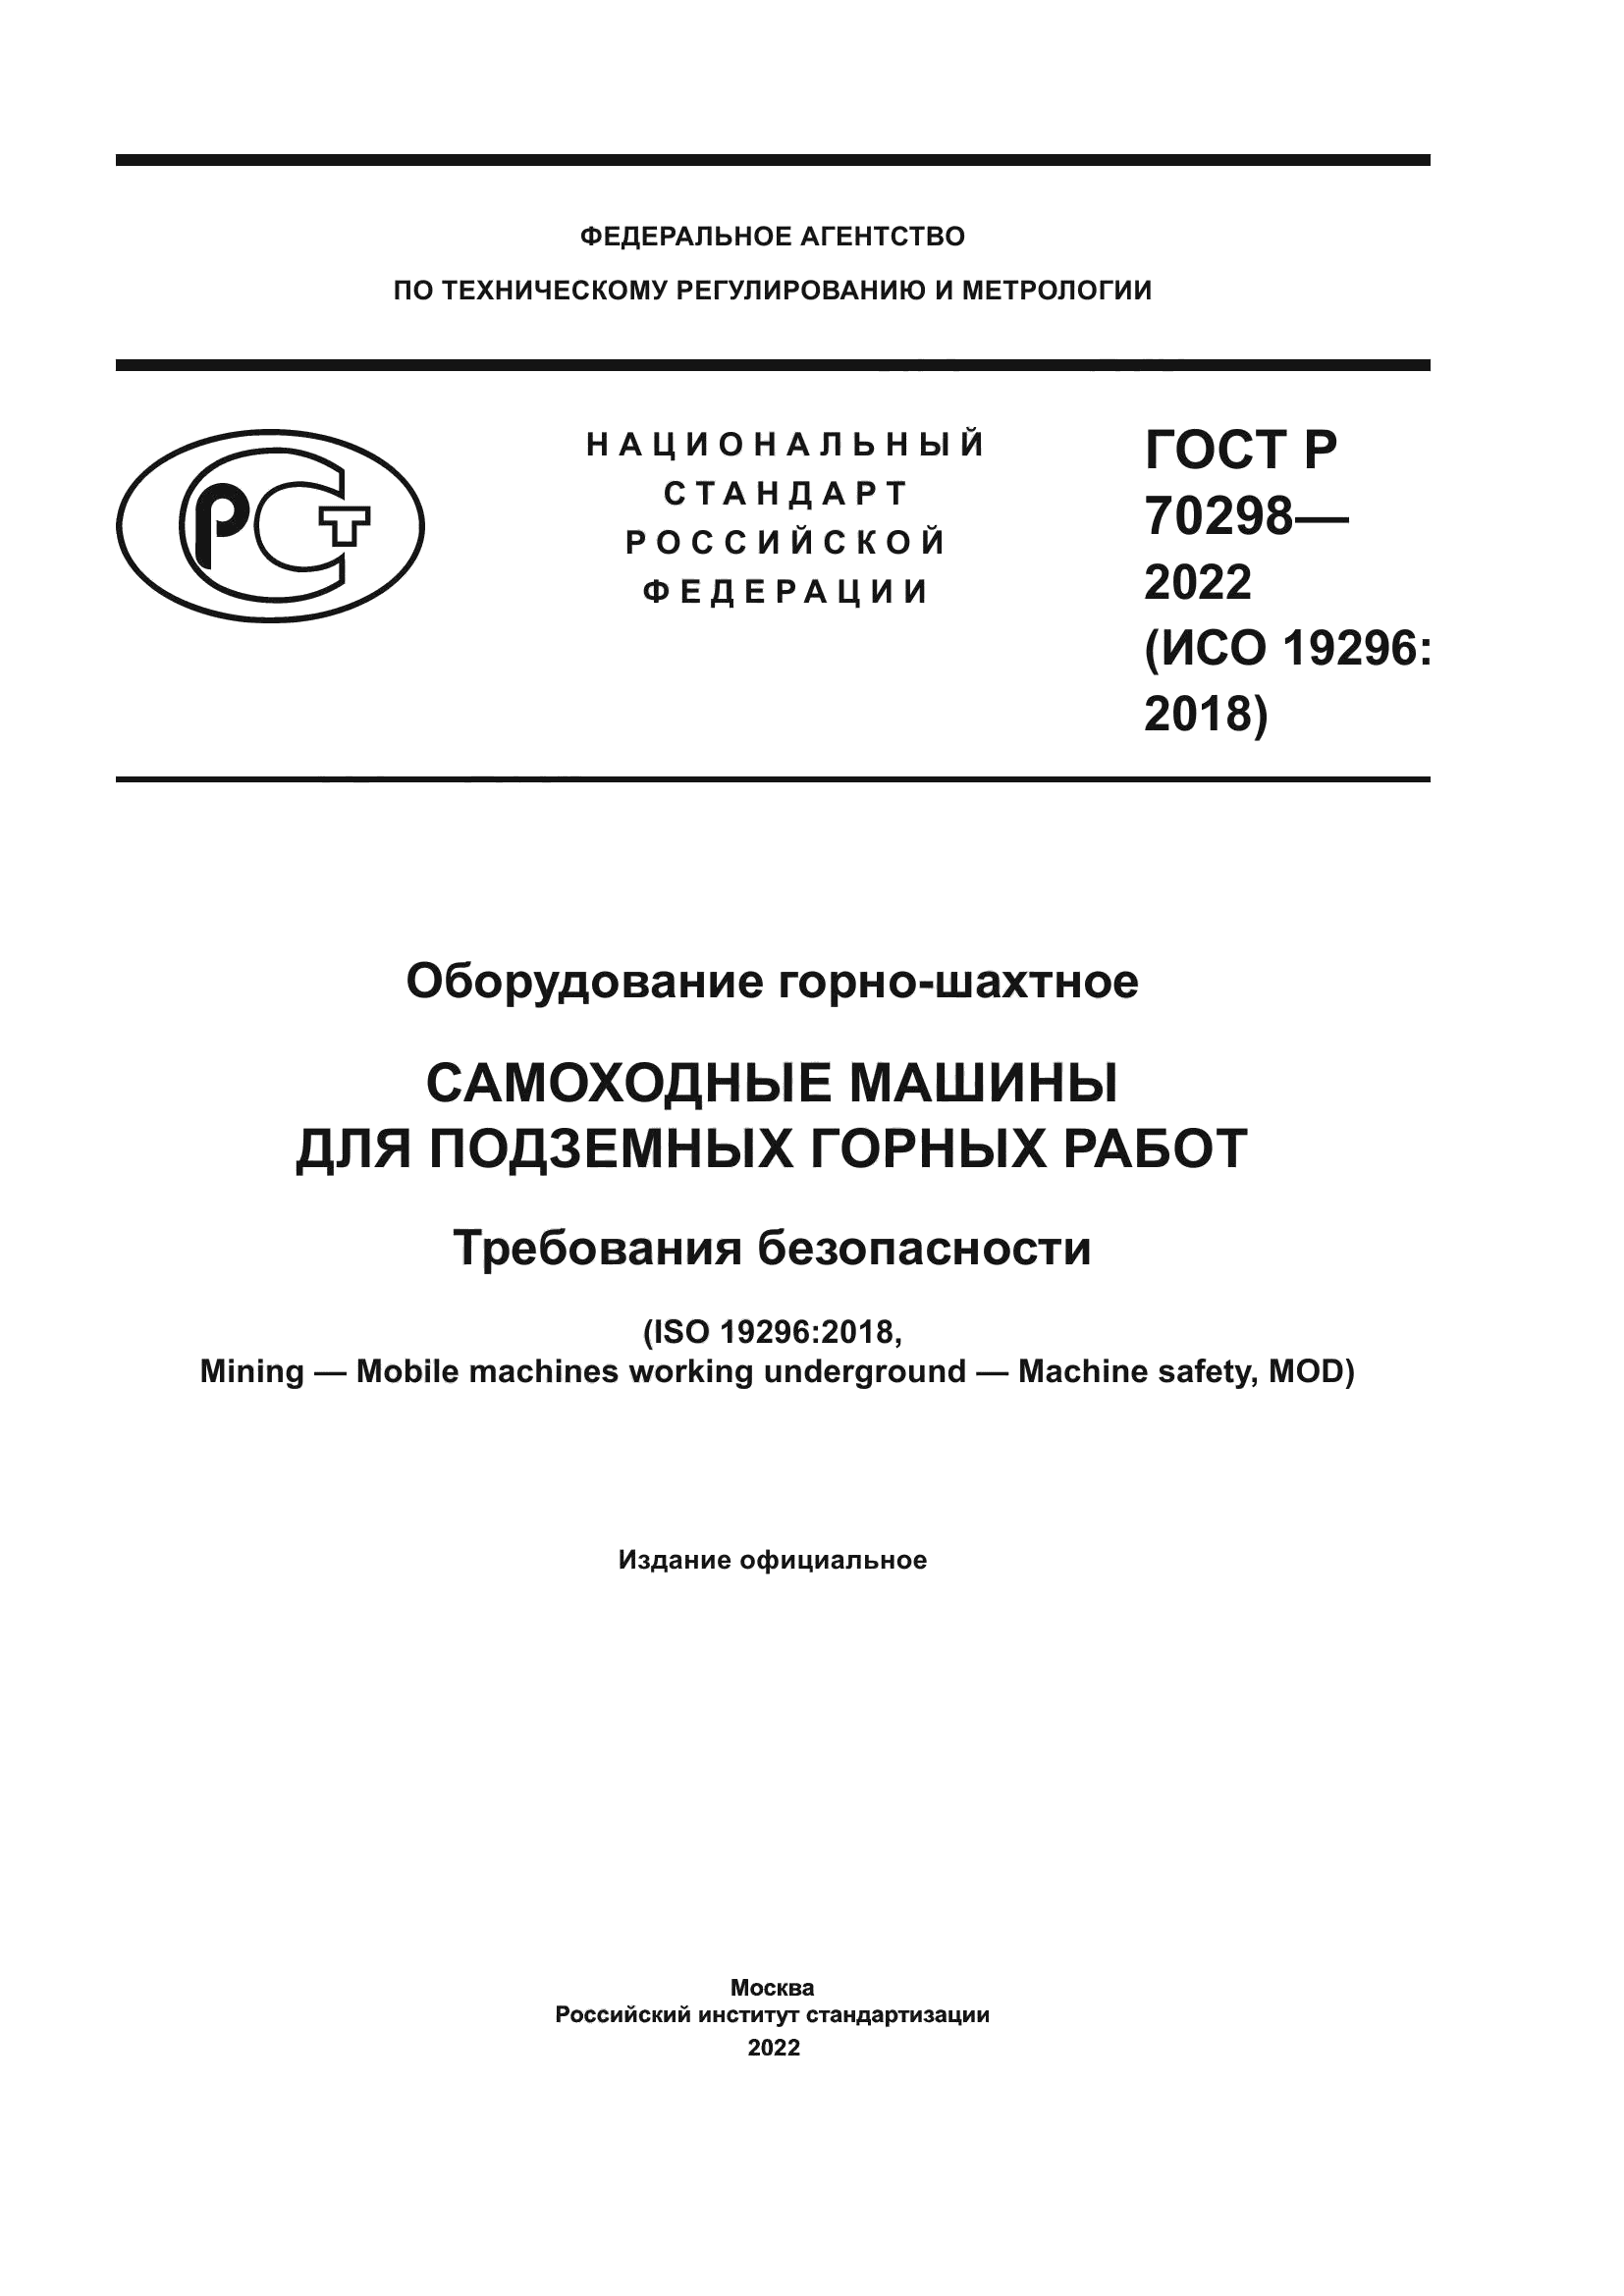 ГОСТ Р 70298-2022